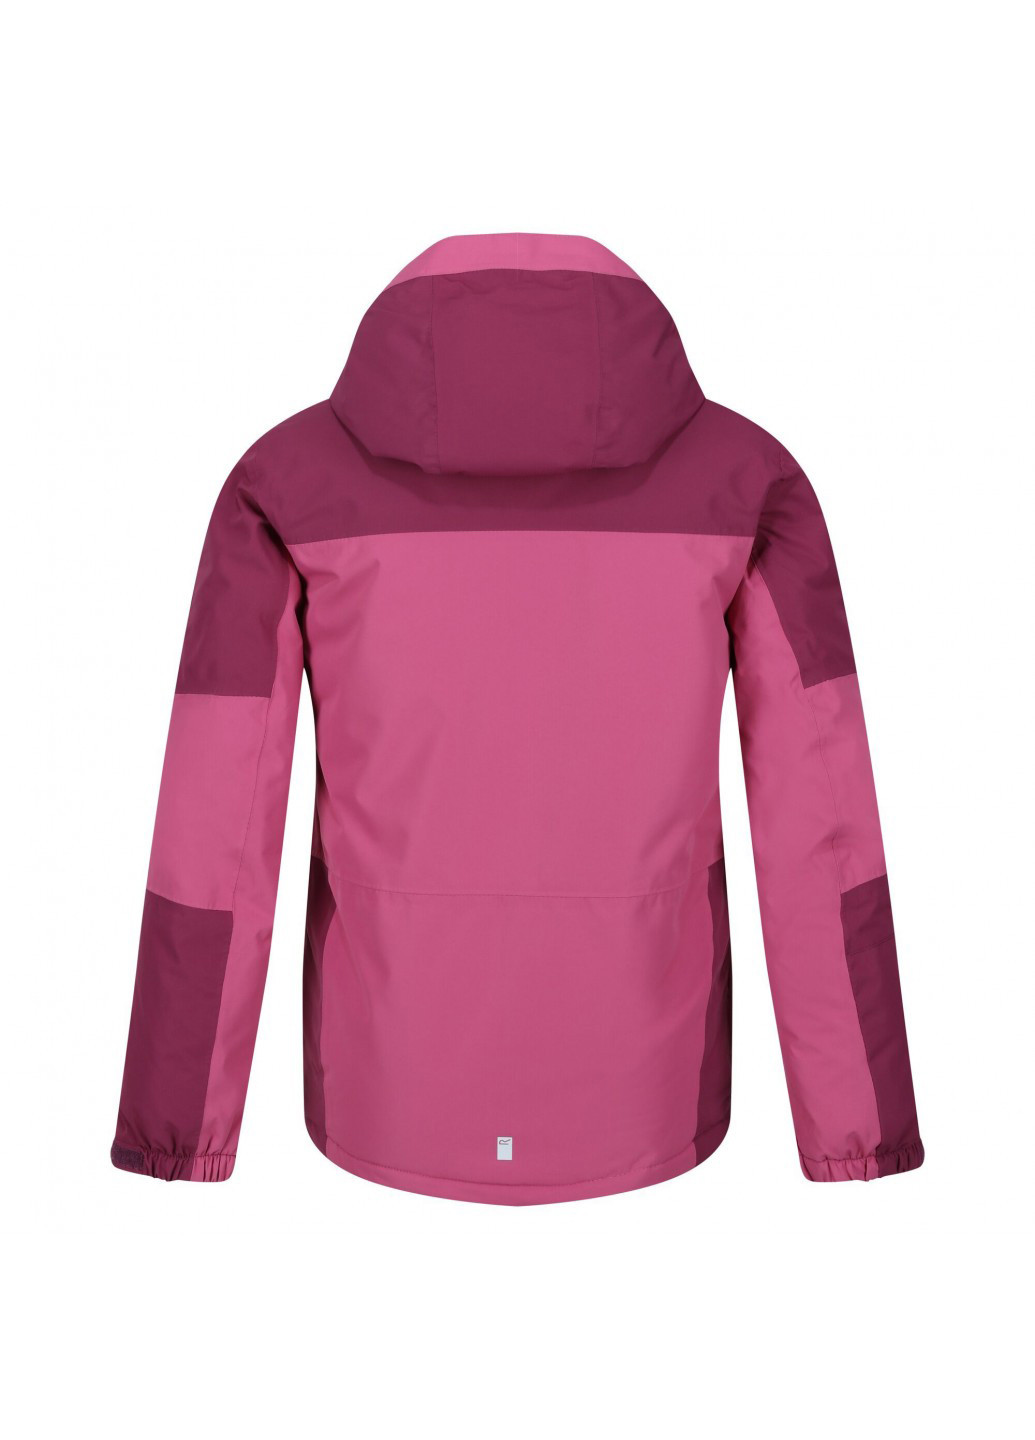 Куртка лыжная Regatta rkp253-vfl (254552124)